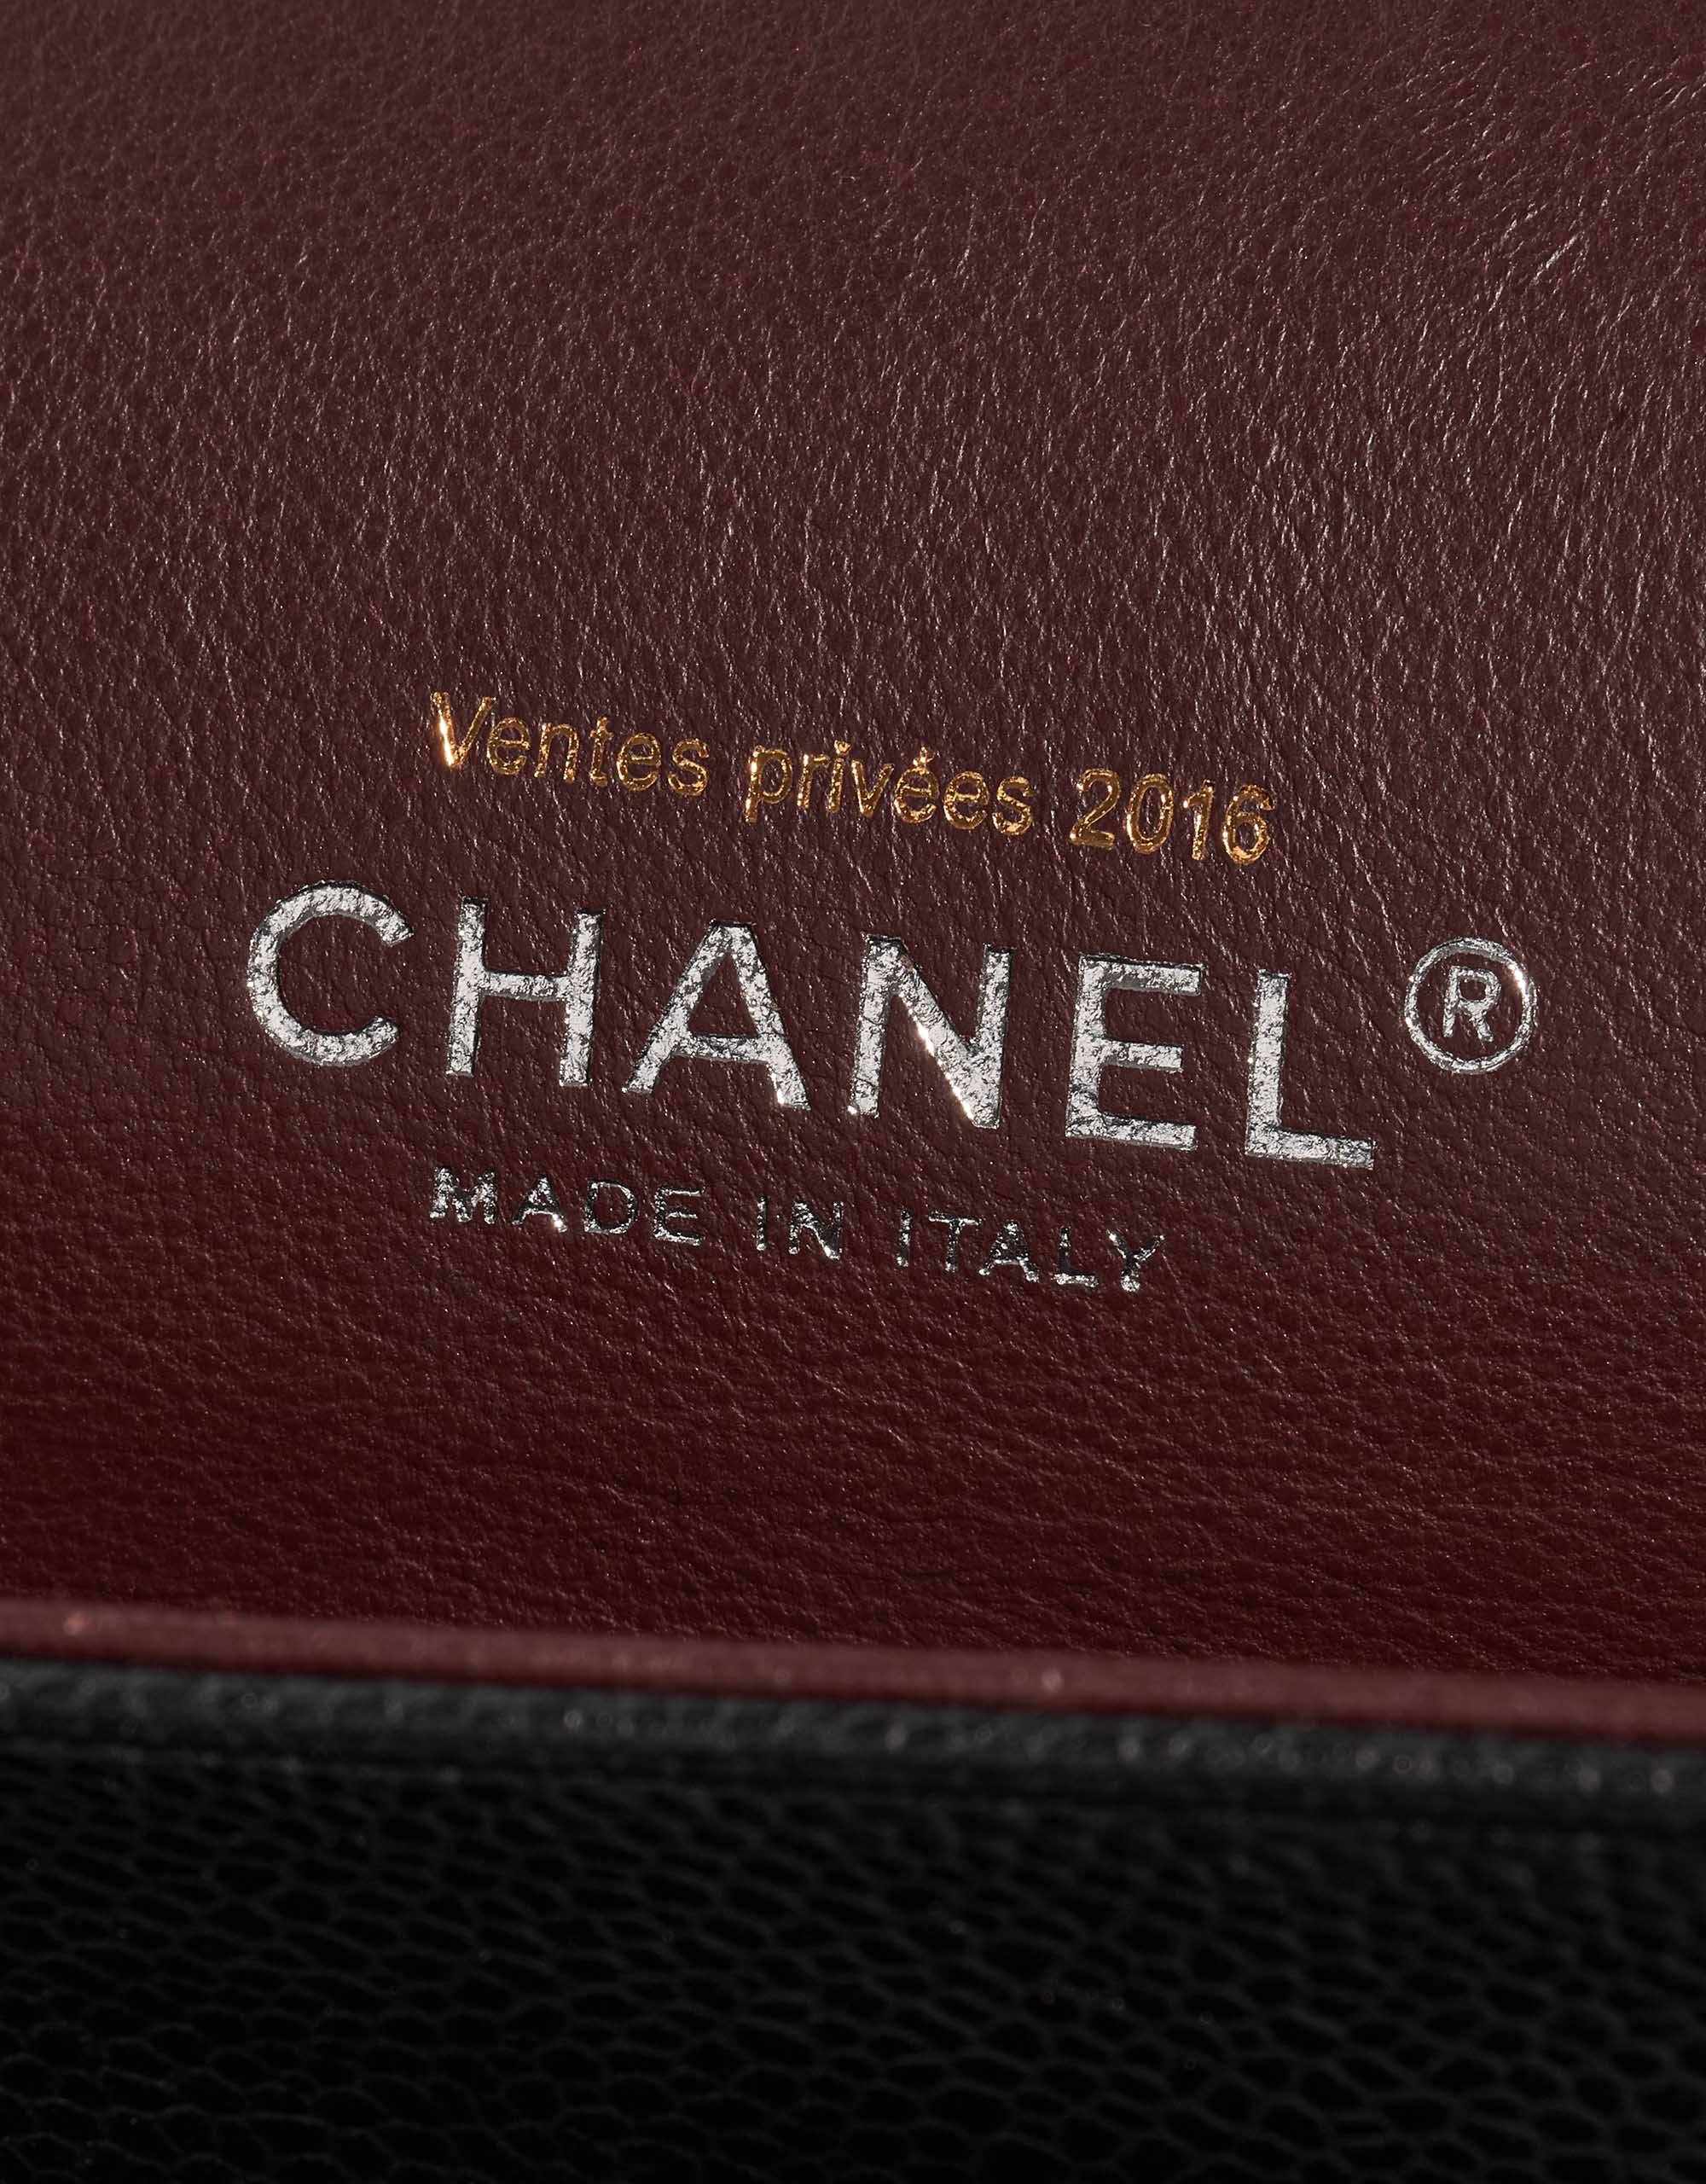 Pre-owned Chanel bag Timeless Maxi Caviar Black Black Logo | Sell your designer bag on Saclab.com